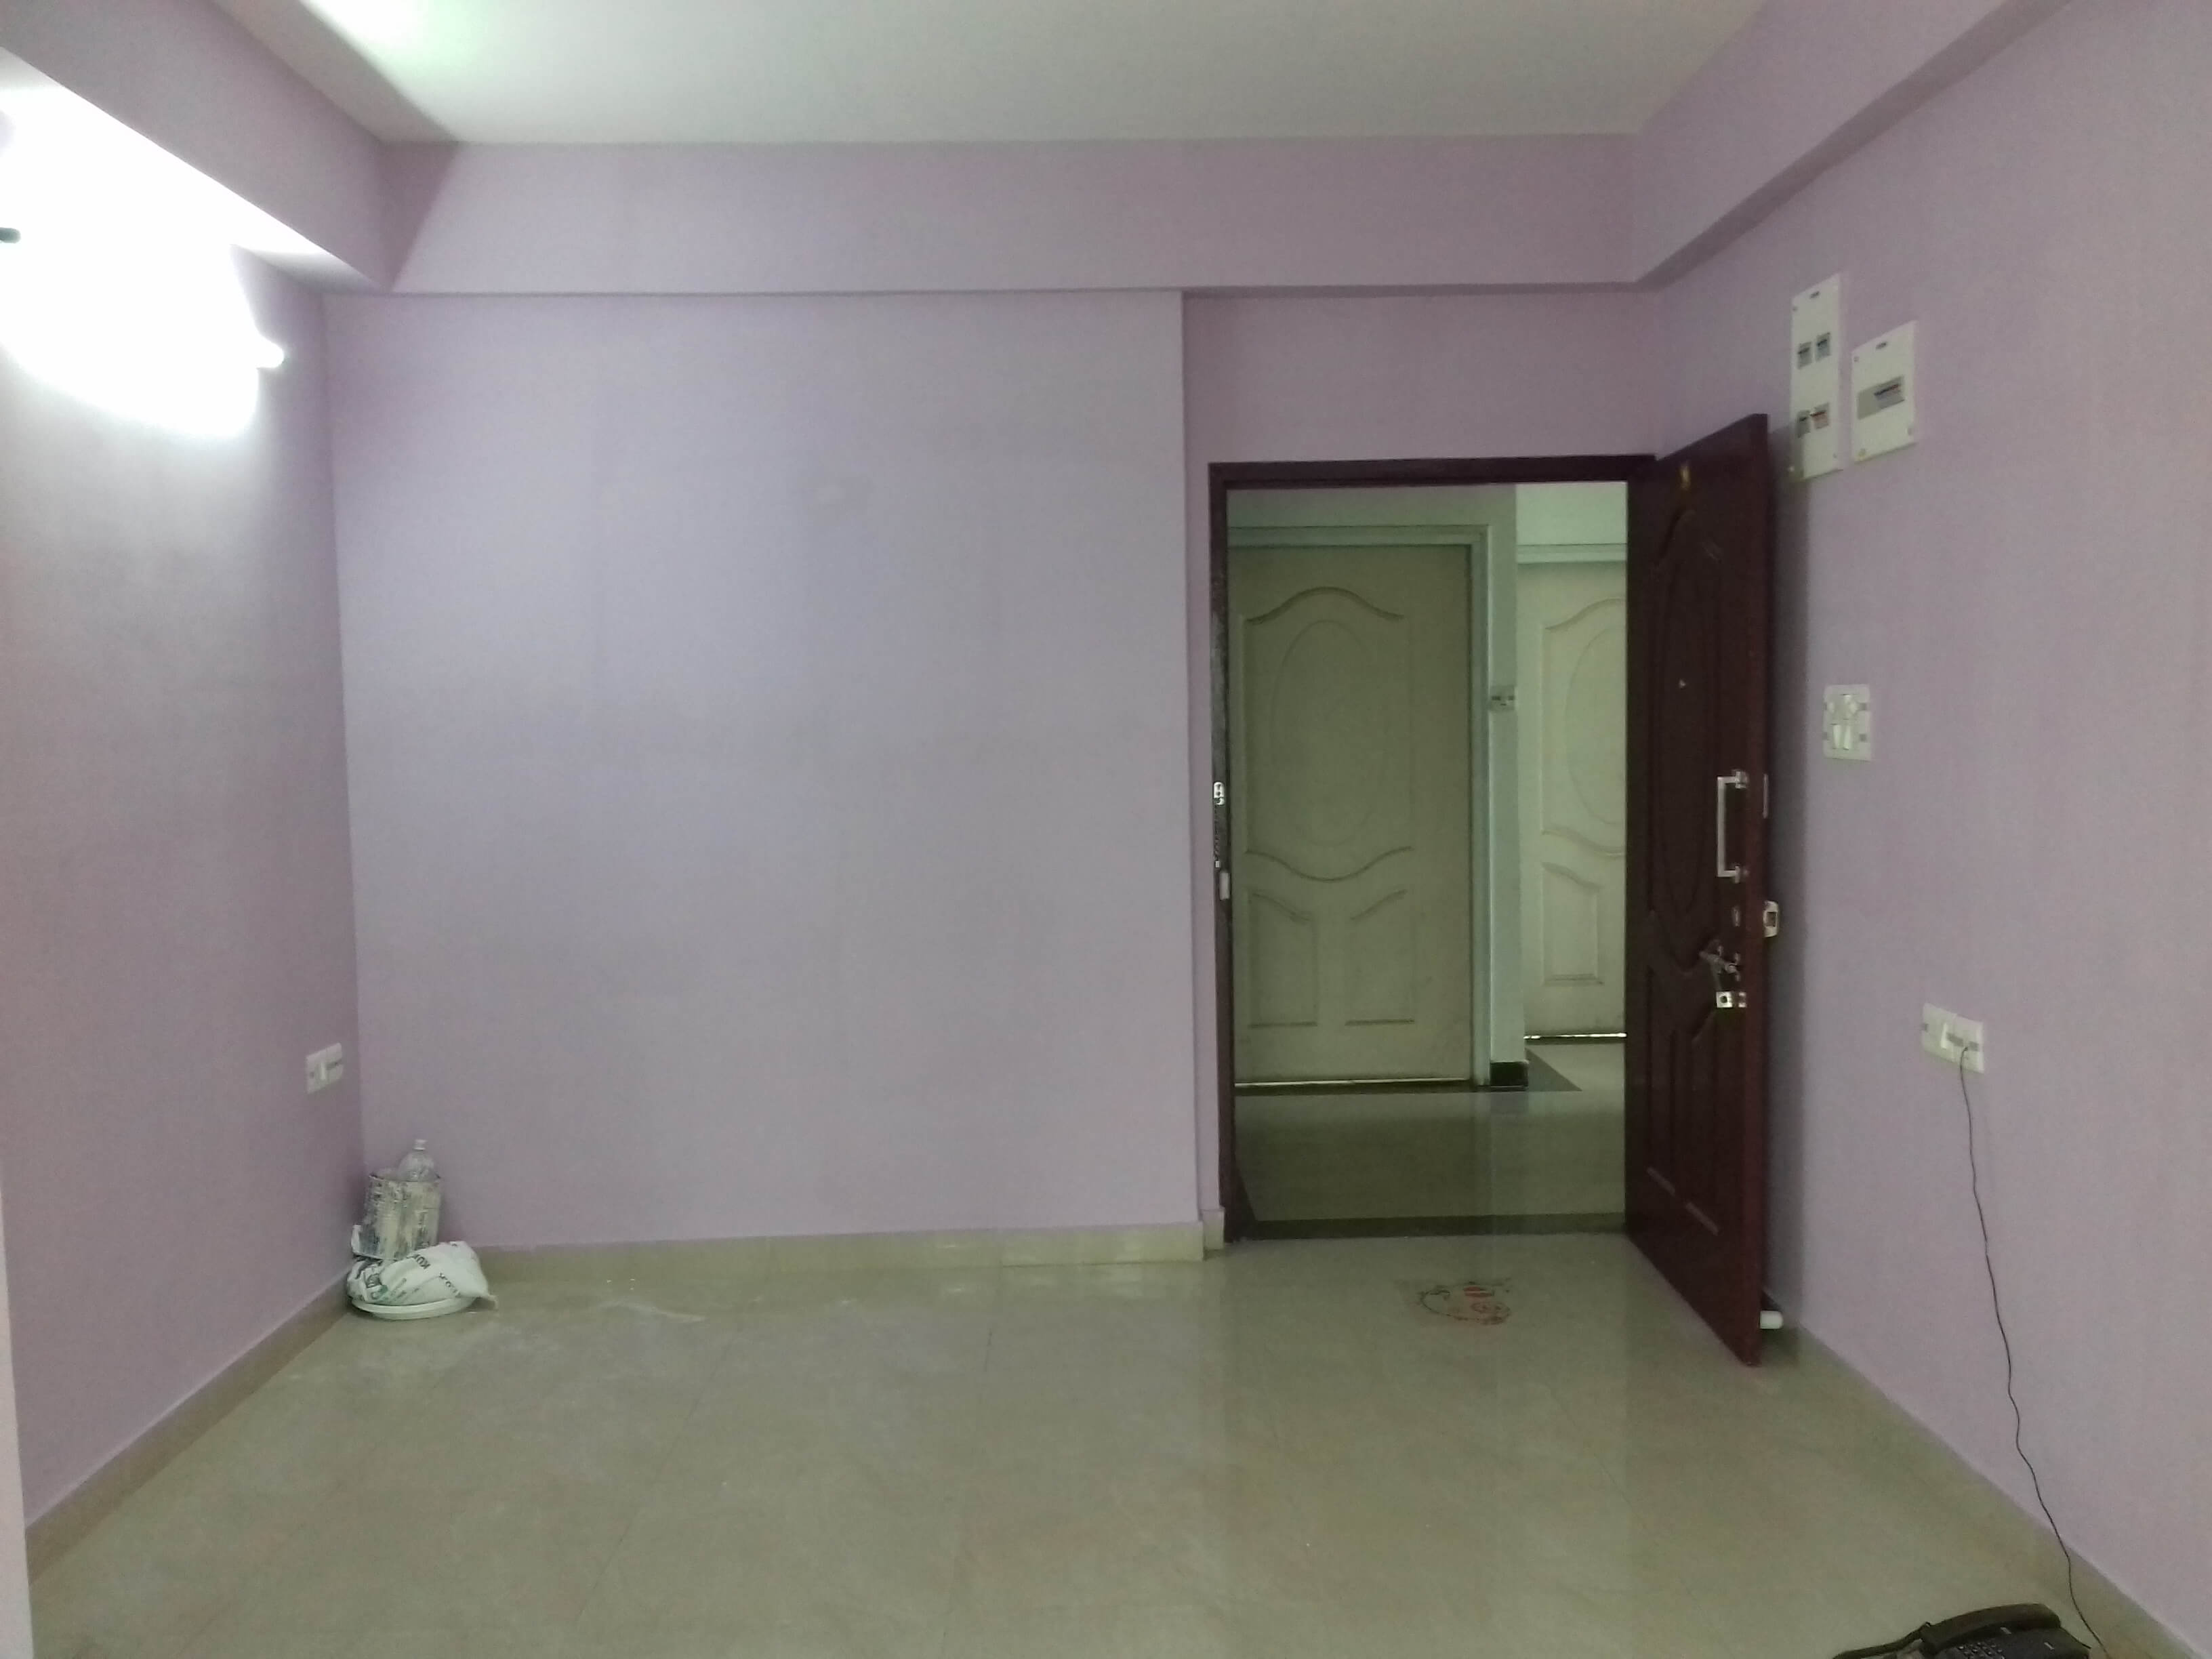 Flat For Rent in Rajarhat Kolkata (Id: 10721) 